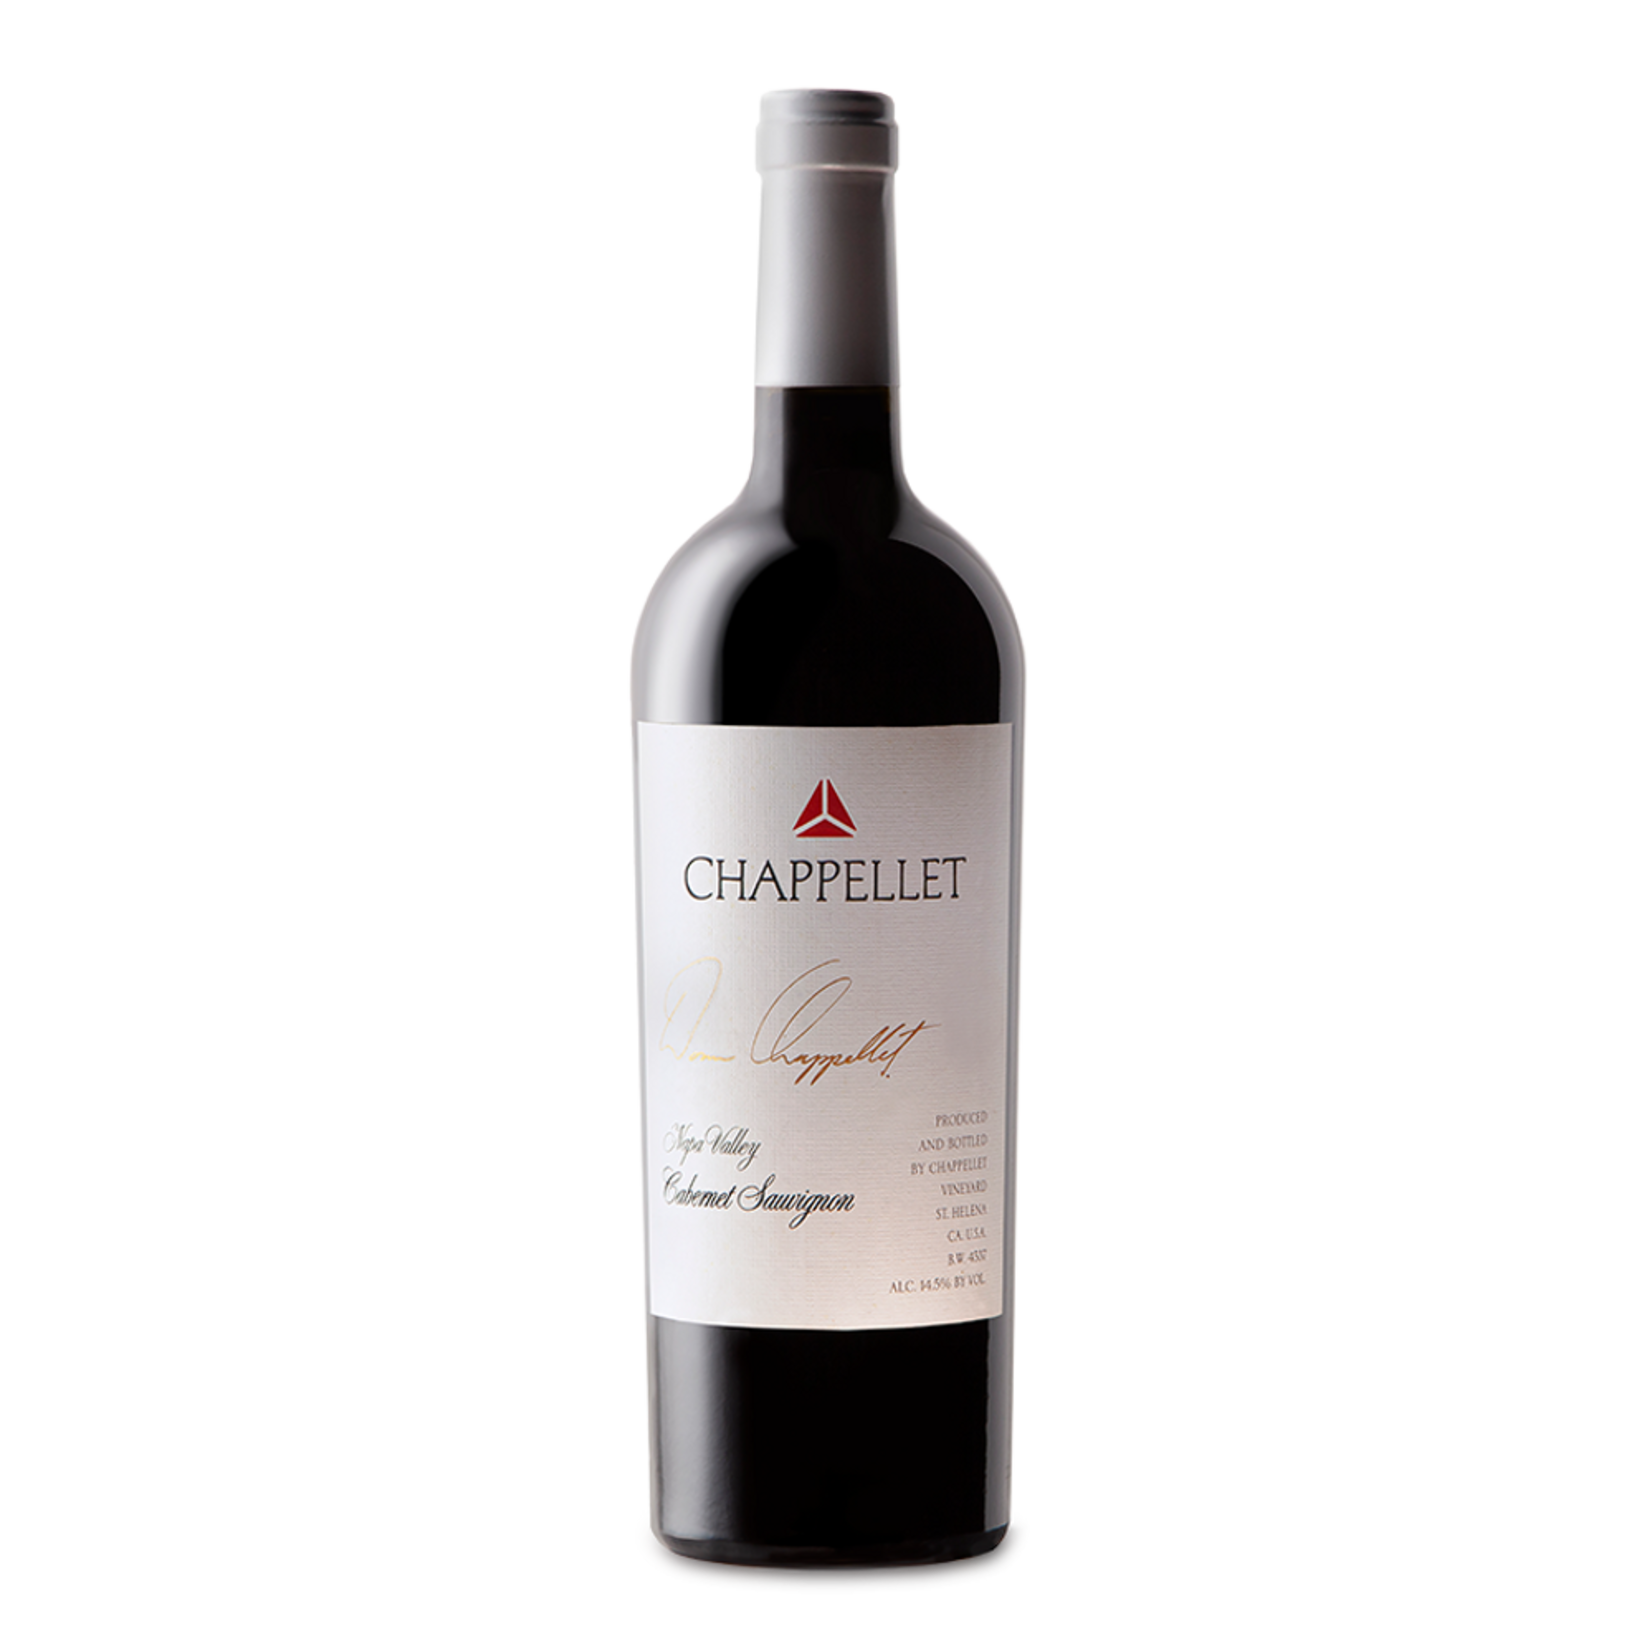 Wine Chappellet Vineyard Signature Cabernet Sauvignon Napa Valley 2019